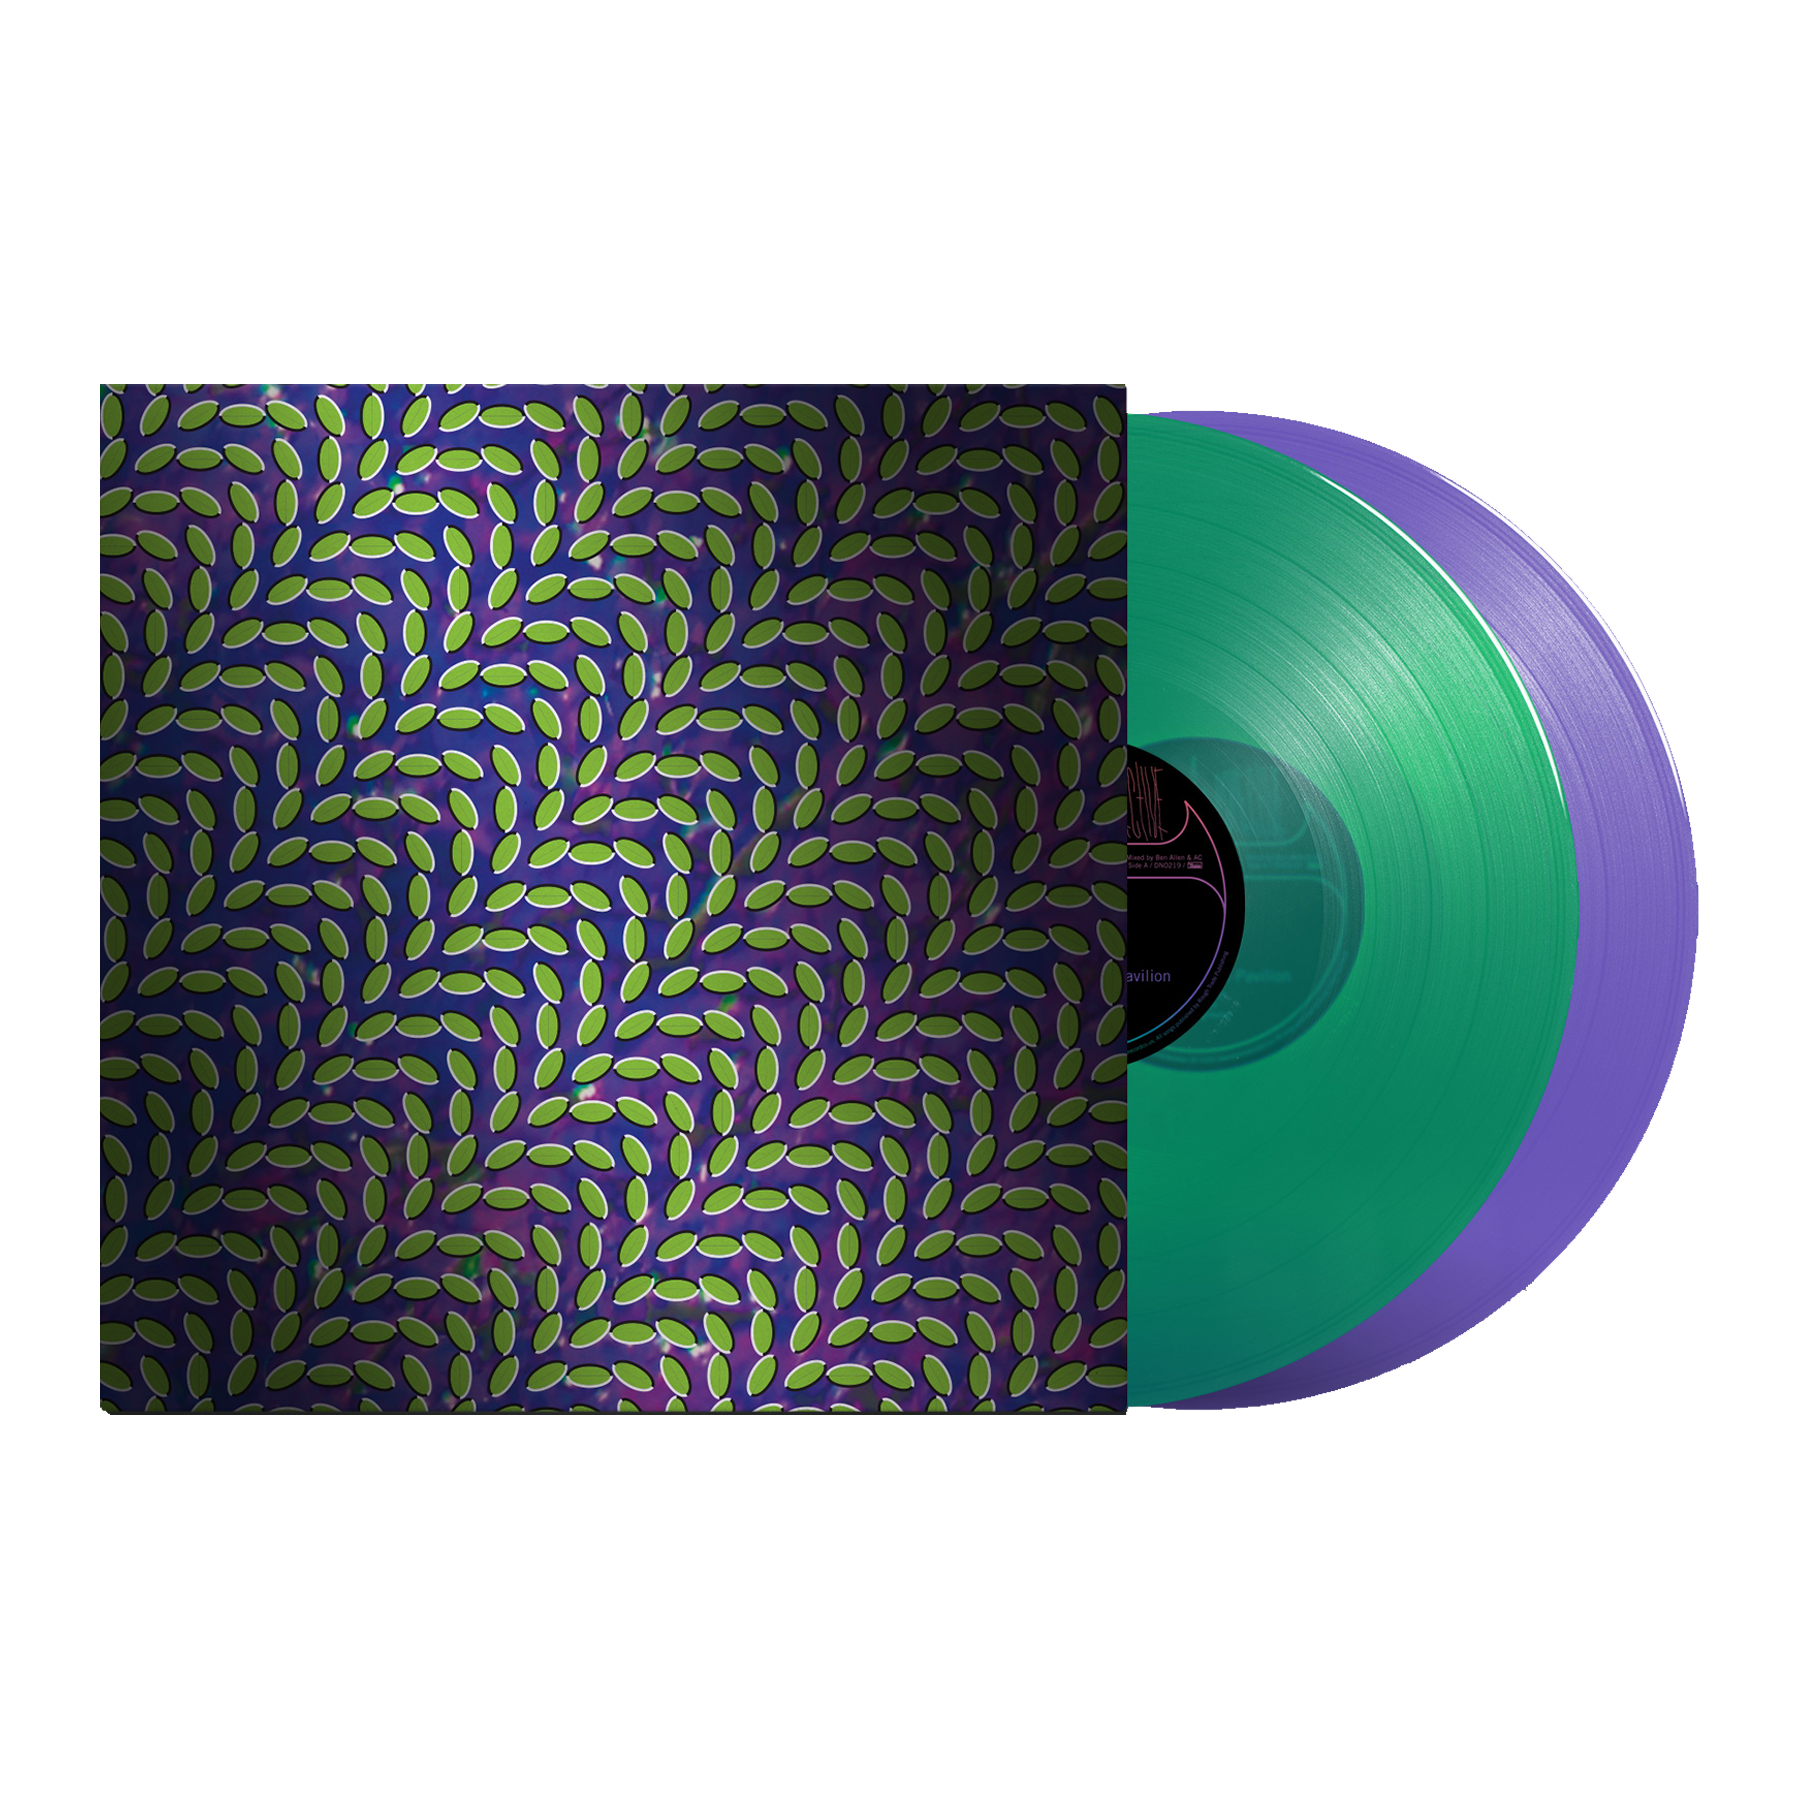 Merriweather Post Pavilion (15th Anniversary): Limited Translucent Green & 'Bluish' Vinyl 2LP